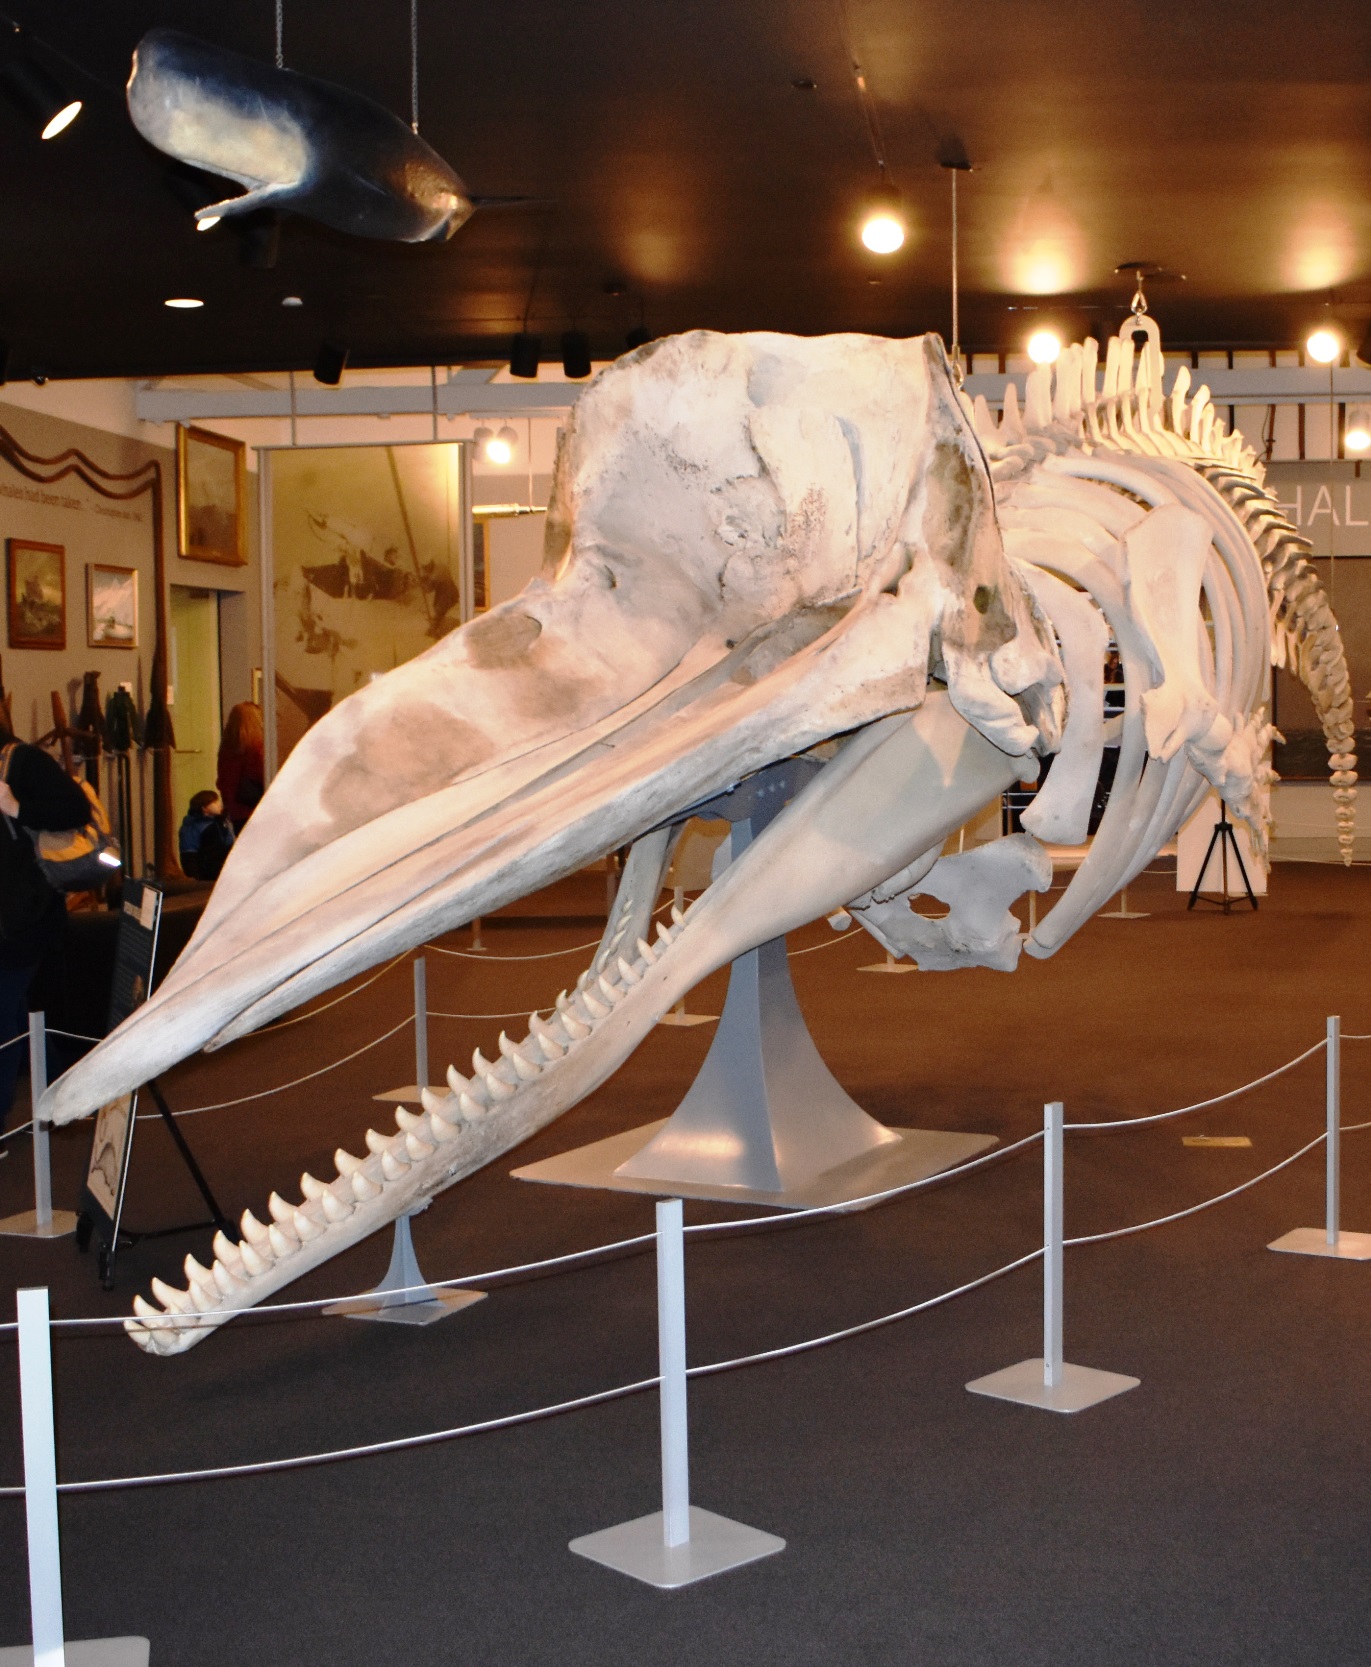 https://www.whalingmuseum.org/wp-content/uploads/2021/08/2019.2.19-family-sperm-whale-turner-gallery.jpg